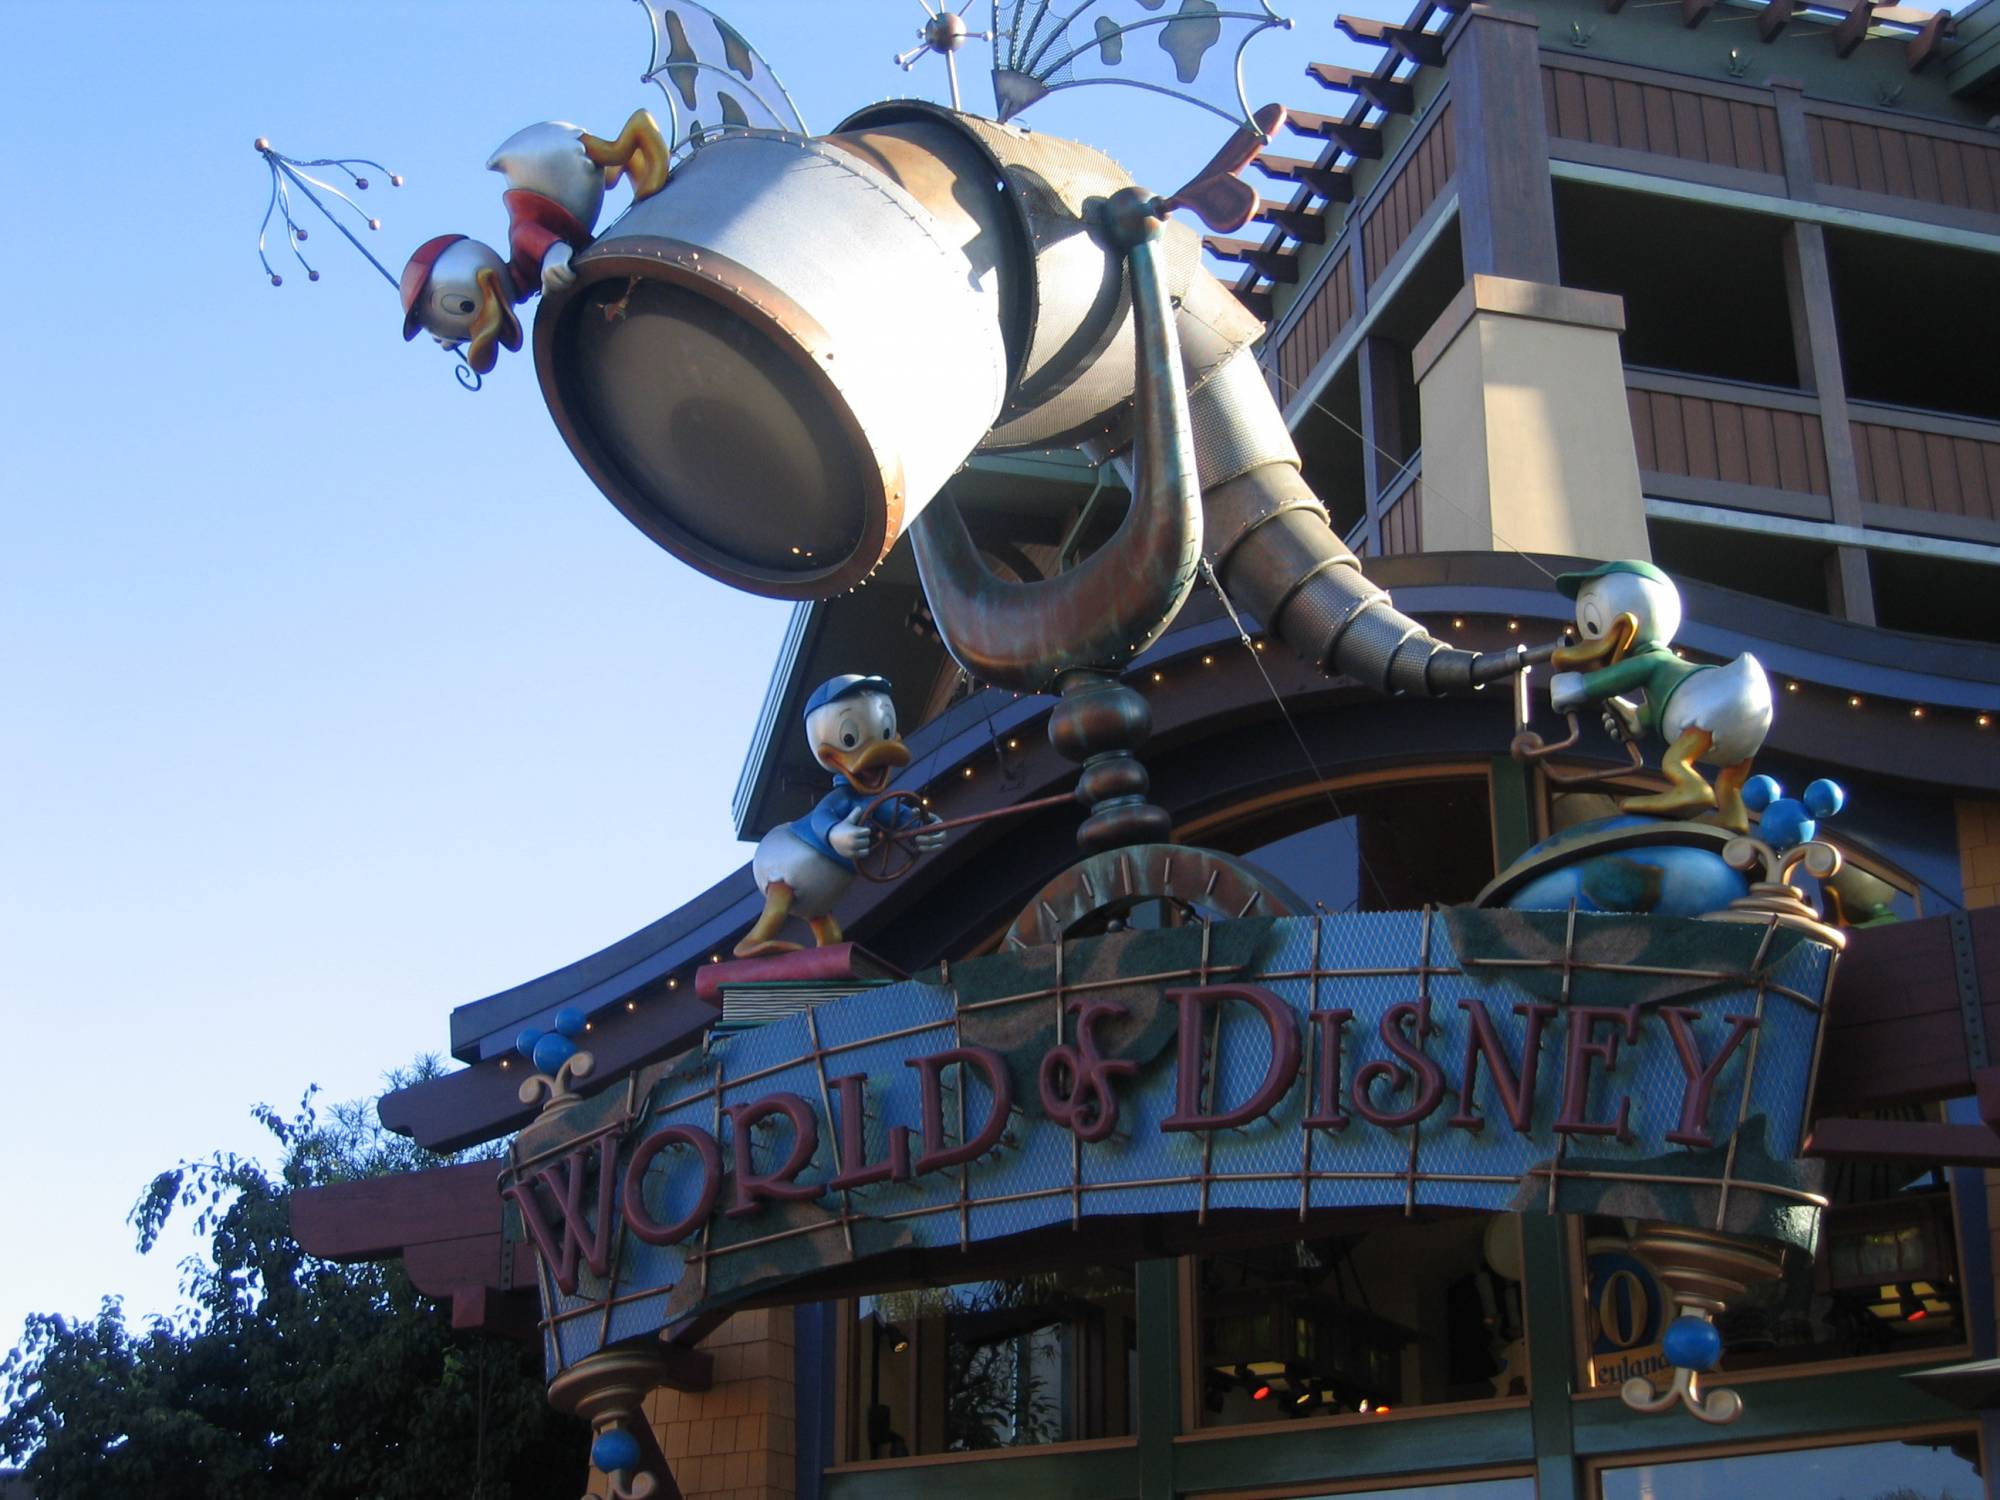 Downtown Disneyland - World of Disney Store Entrance